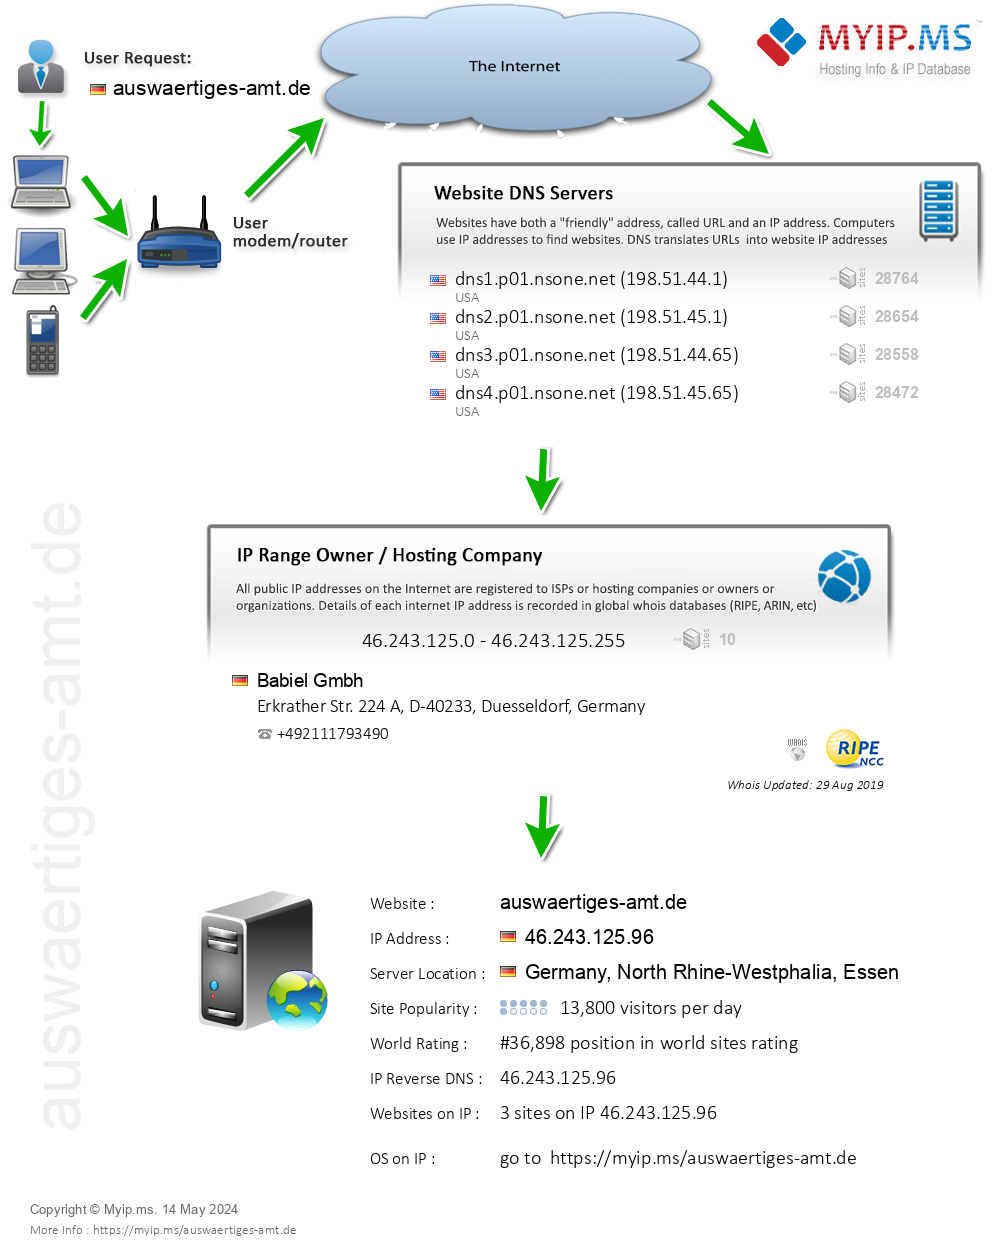 Auswaertiges-amt.de - Website Hosting Visual IP Diagram